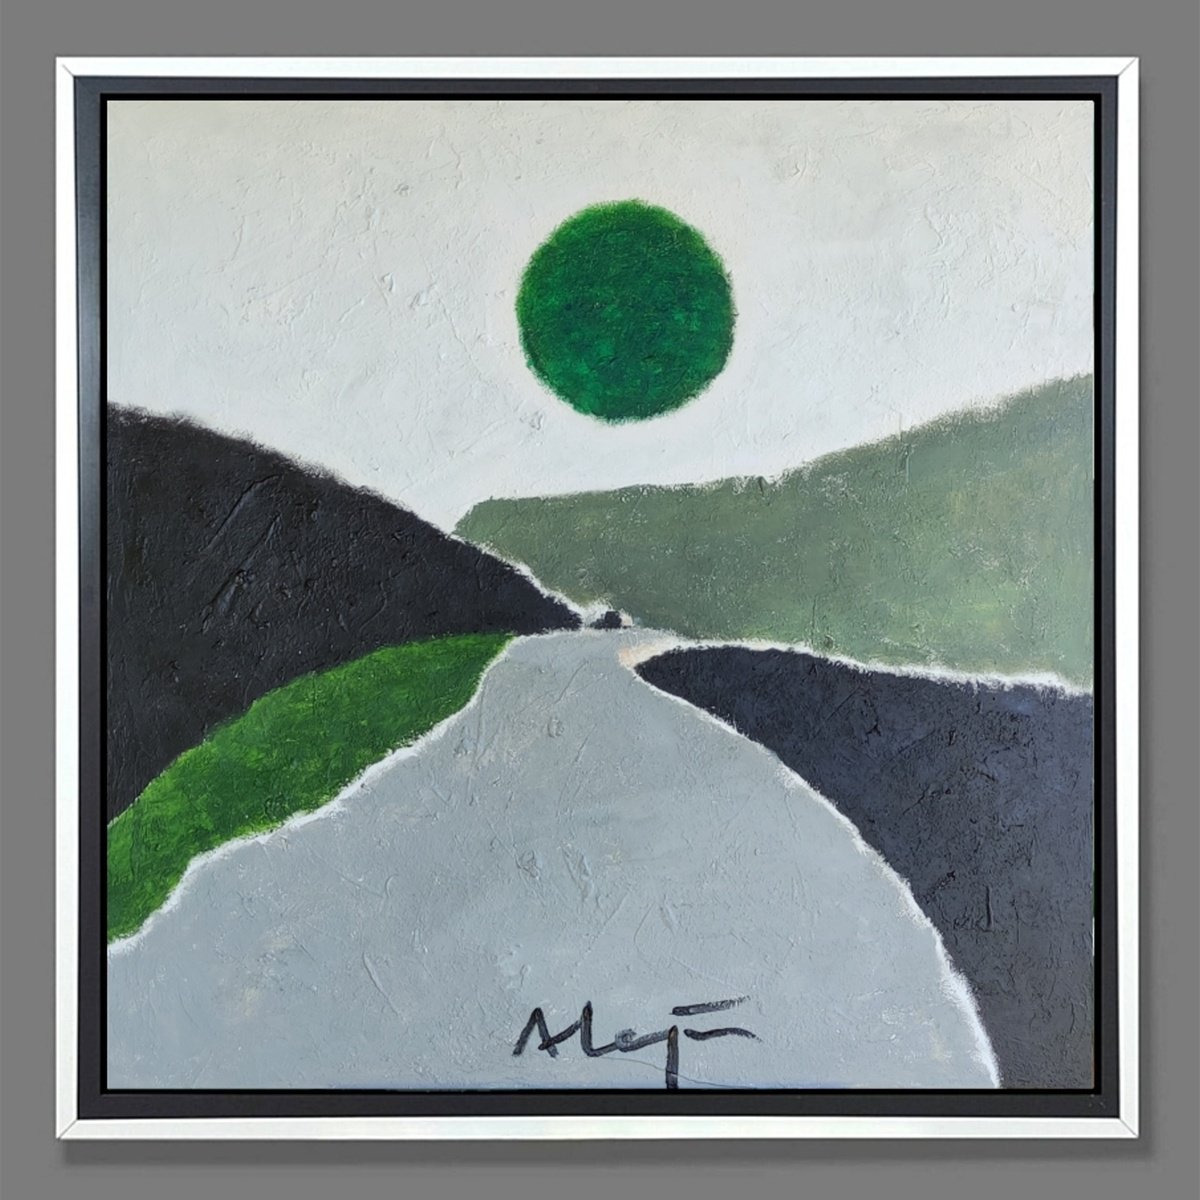 Moondance (pop impressionist landscape) by Alejos